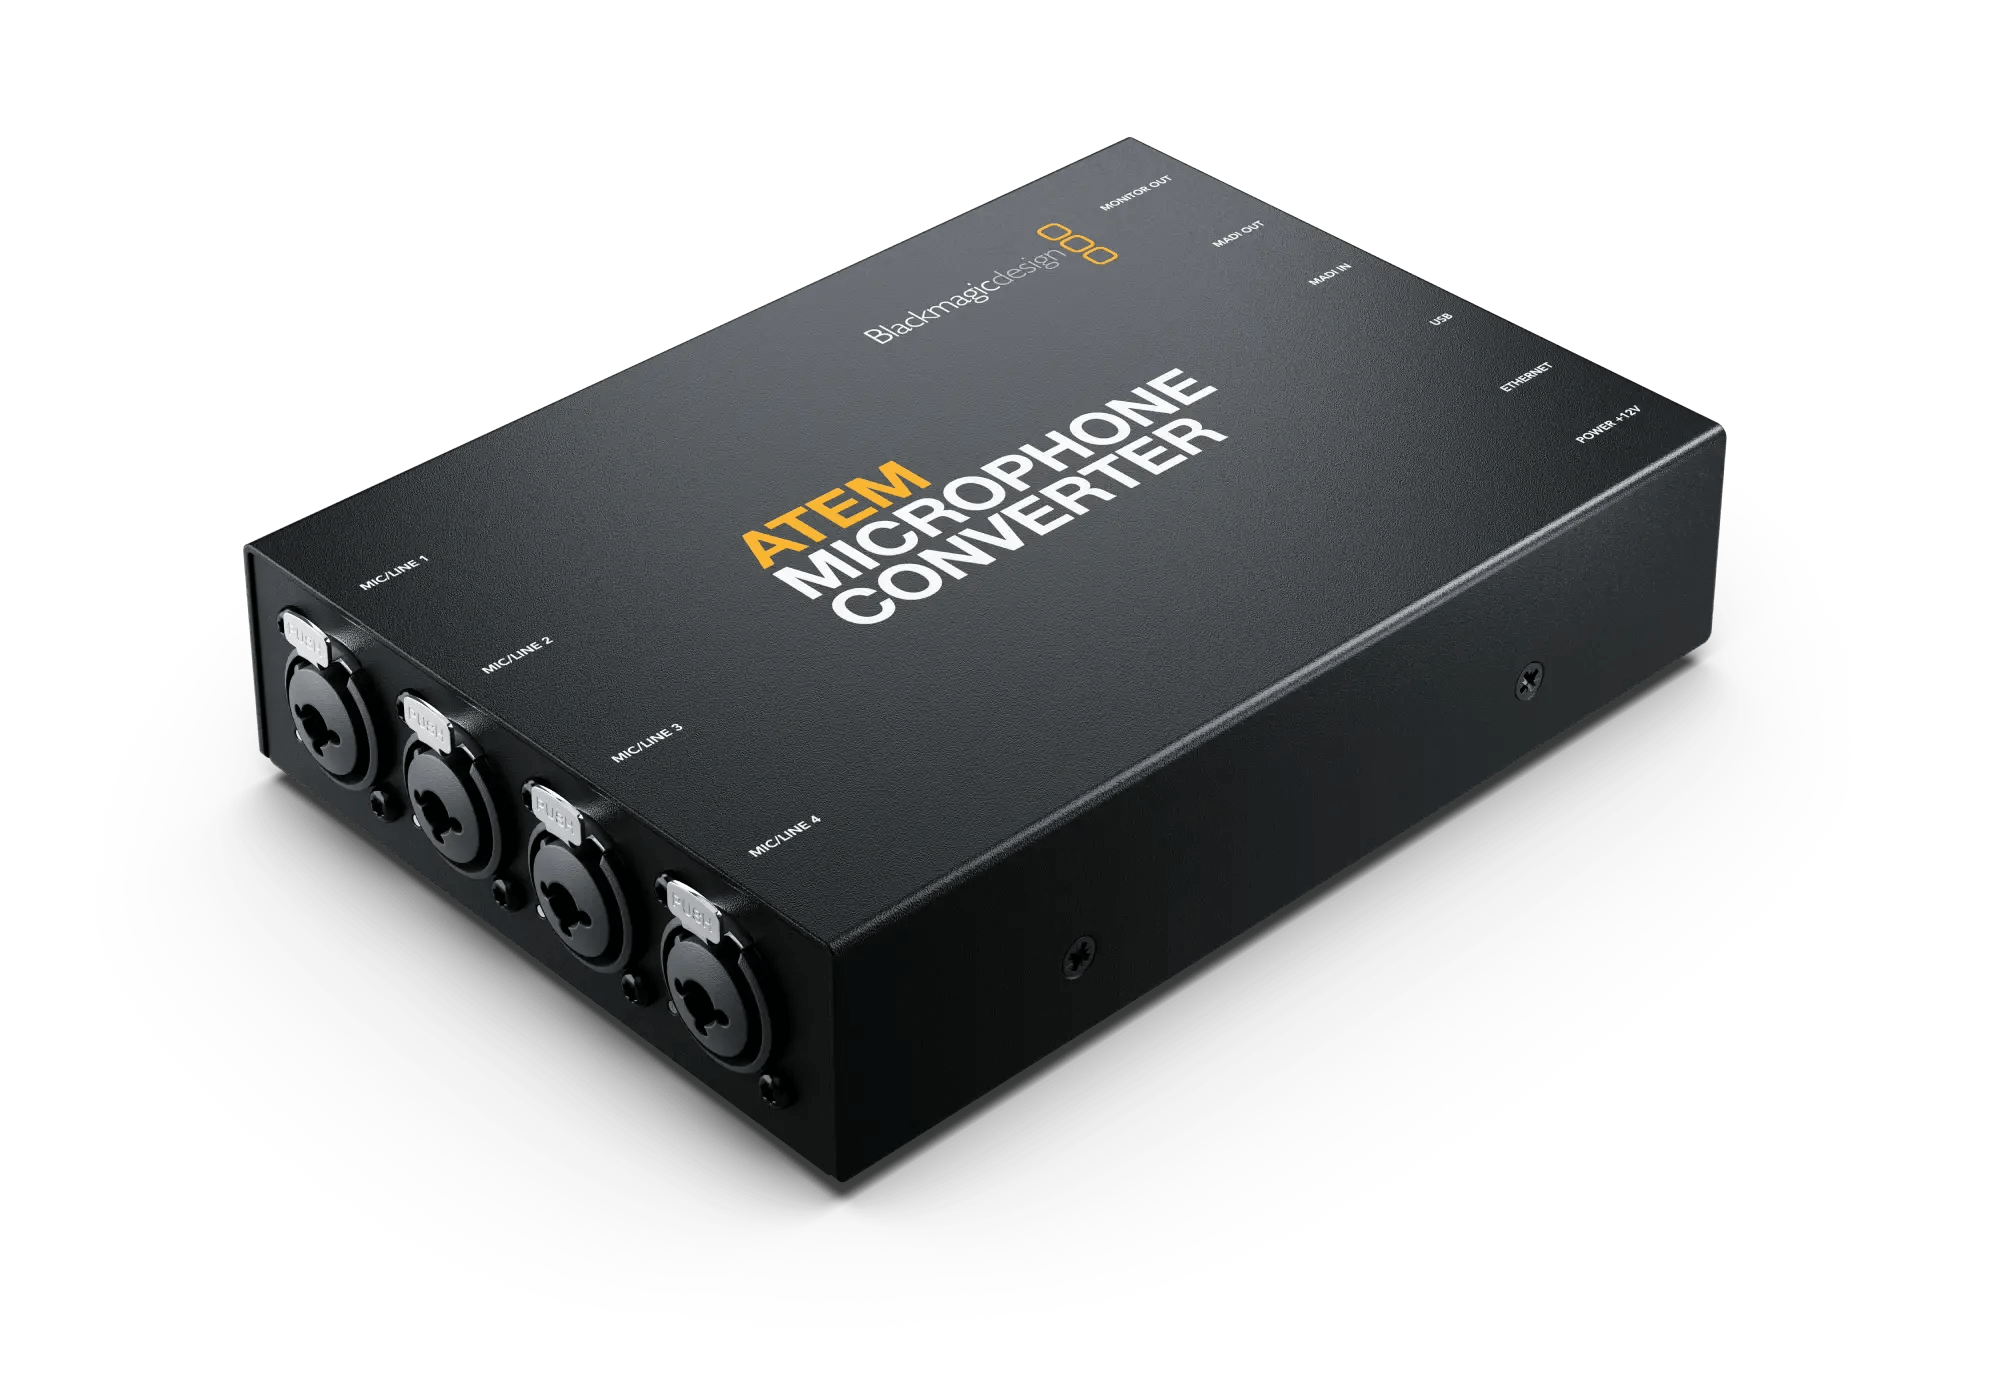 Blackmagic Design Converters ATEM Microphone Converter ((Due April 2023)